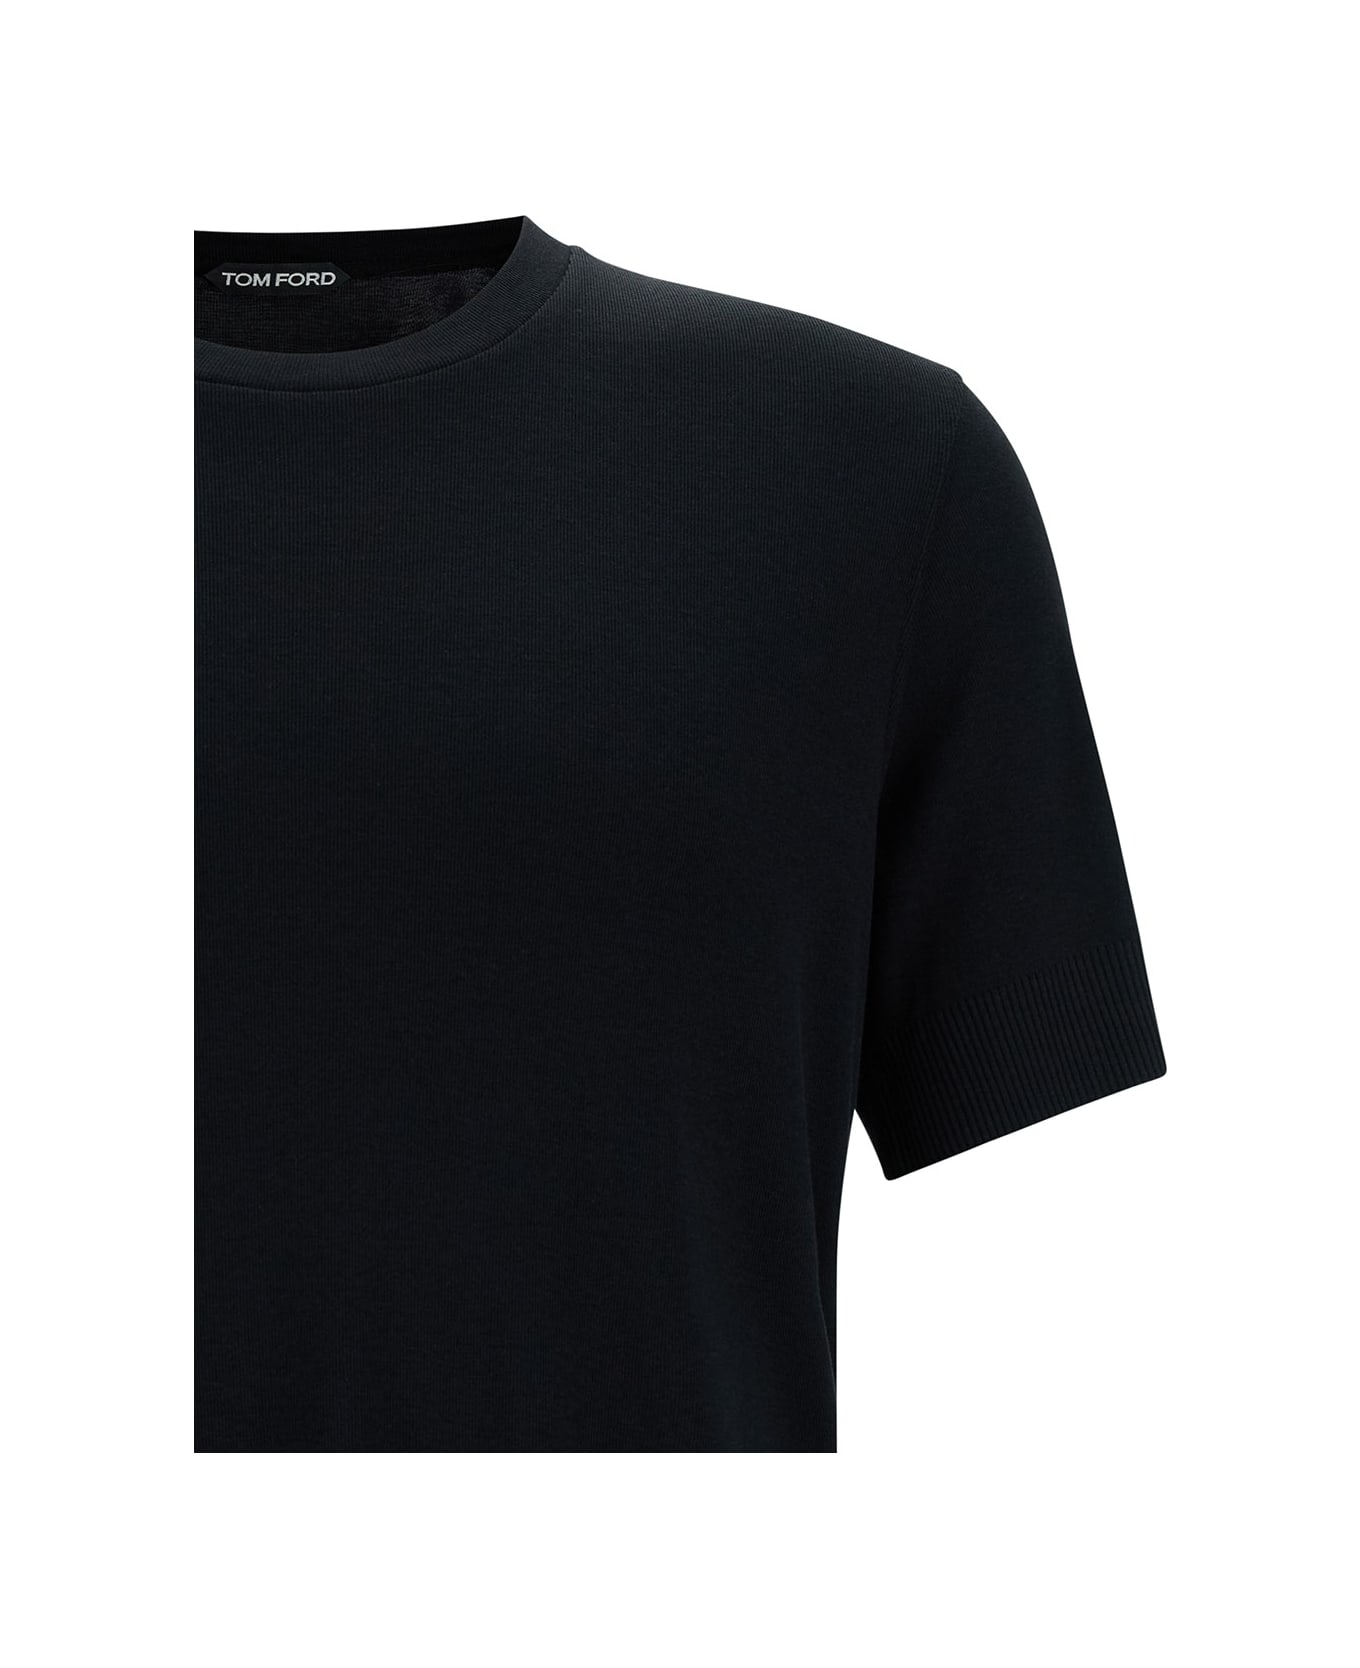 Tom Ford Black Crewneck T-shirt In Cotton Blend Man - Black